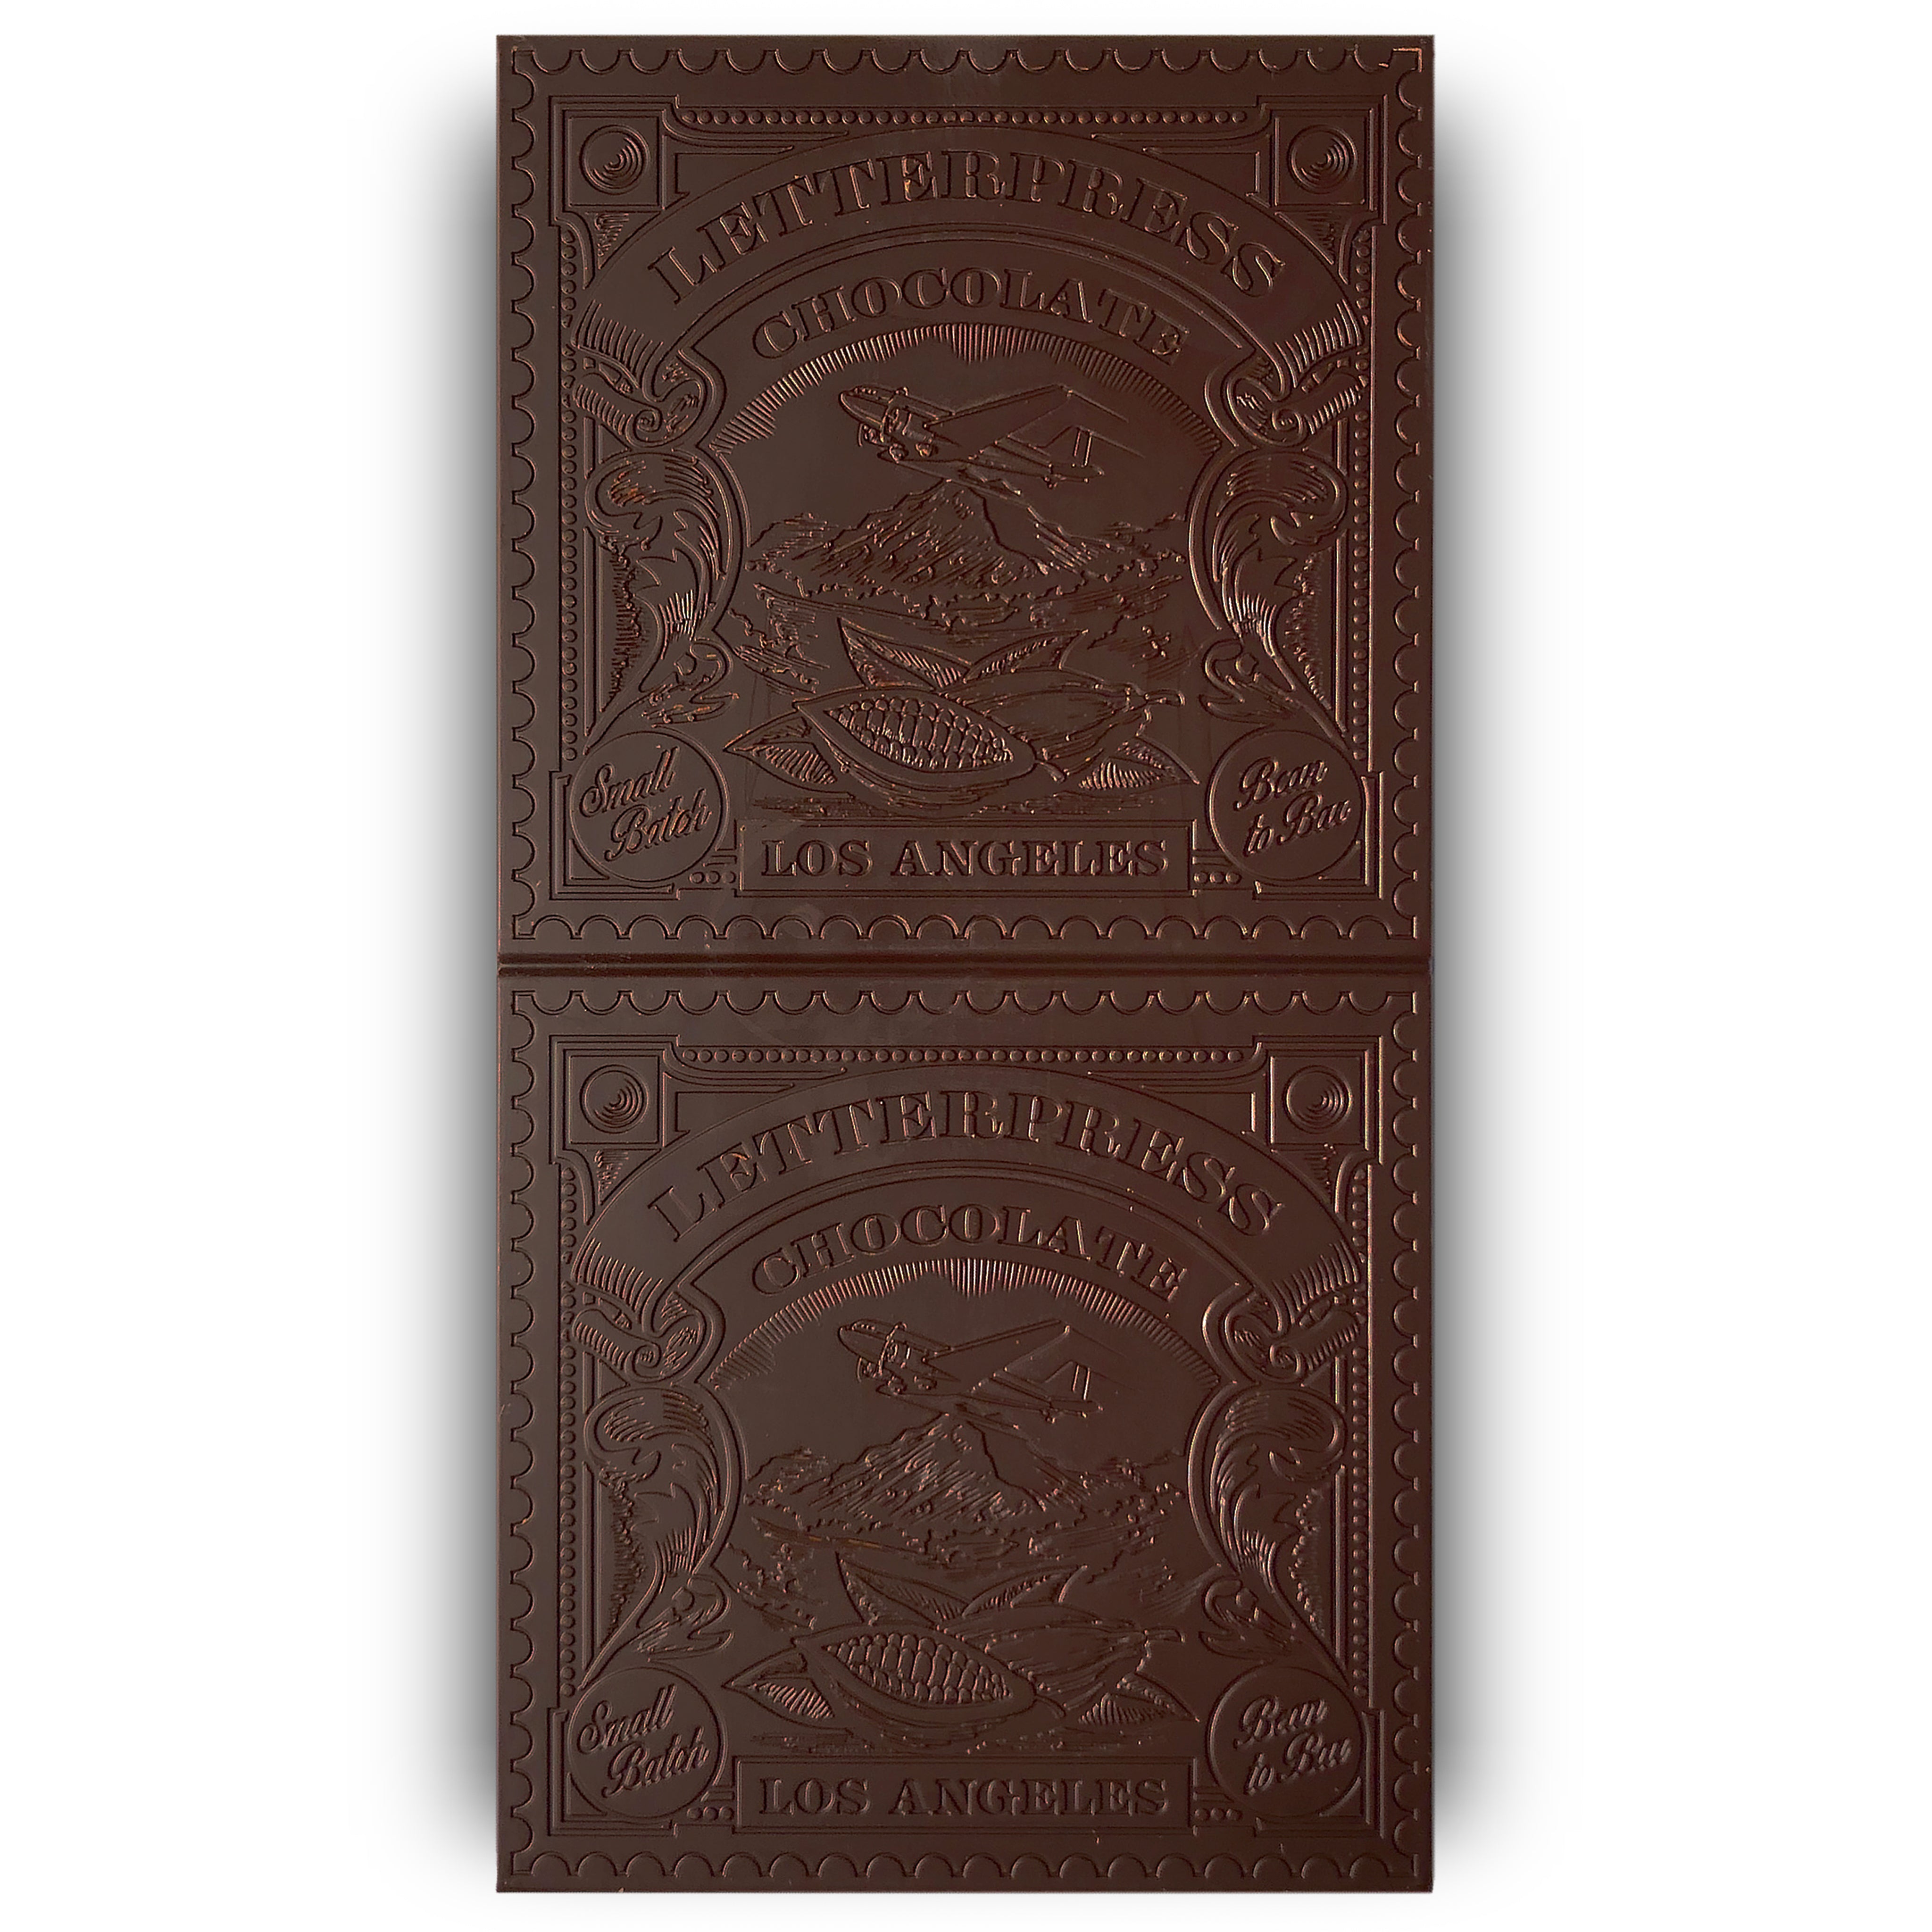 Patanemo Venezuela 70% Dark Chocolate bar